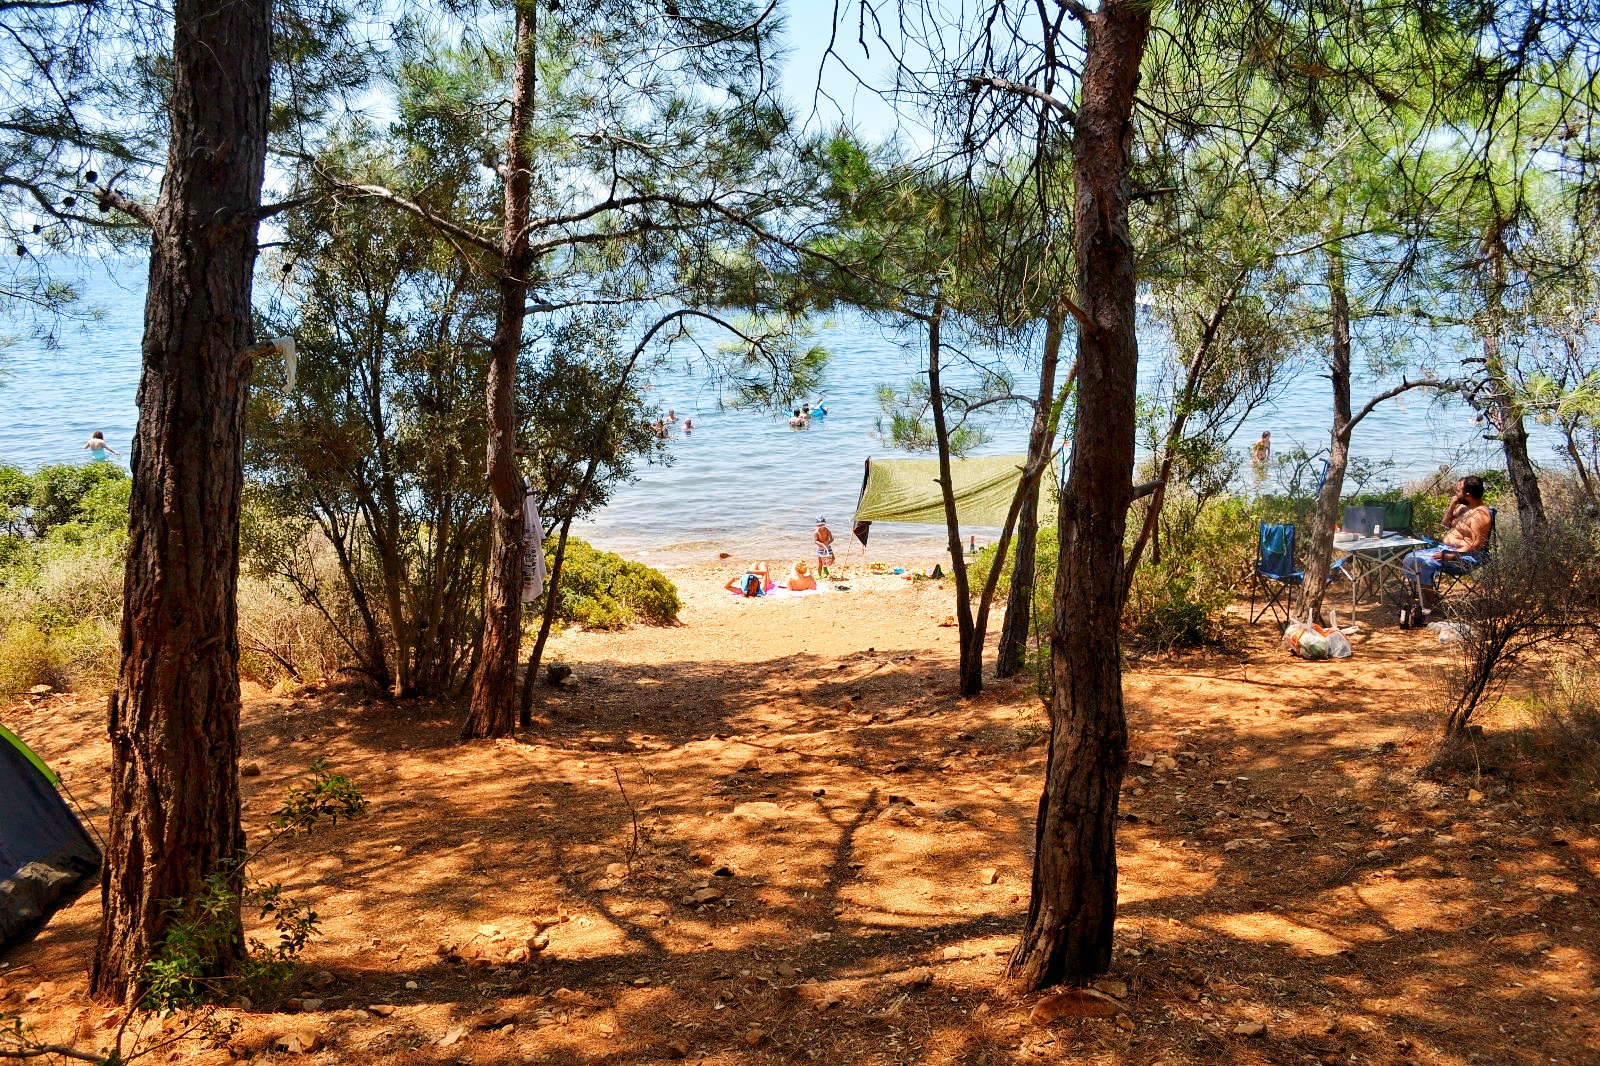 Foto de Kirmizikuyu Cd. beach localizado em área natural